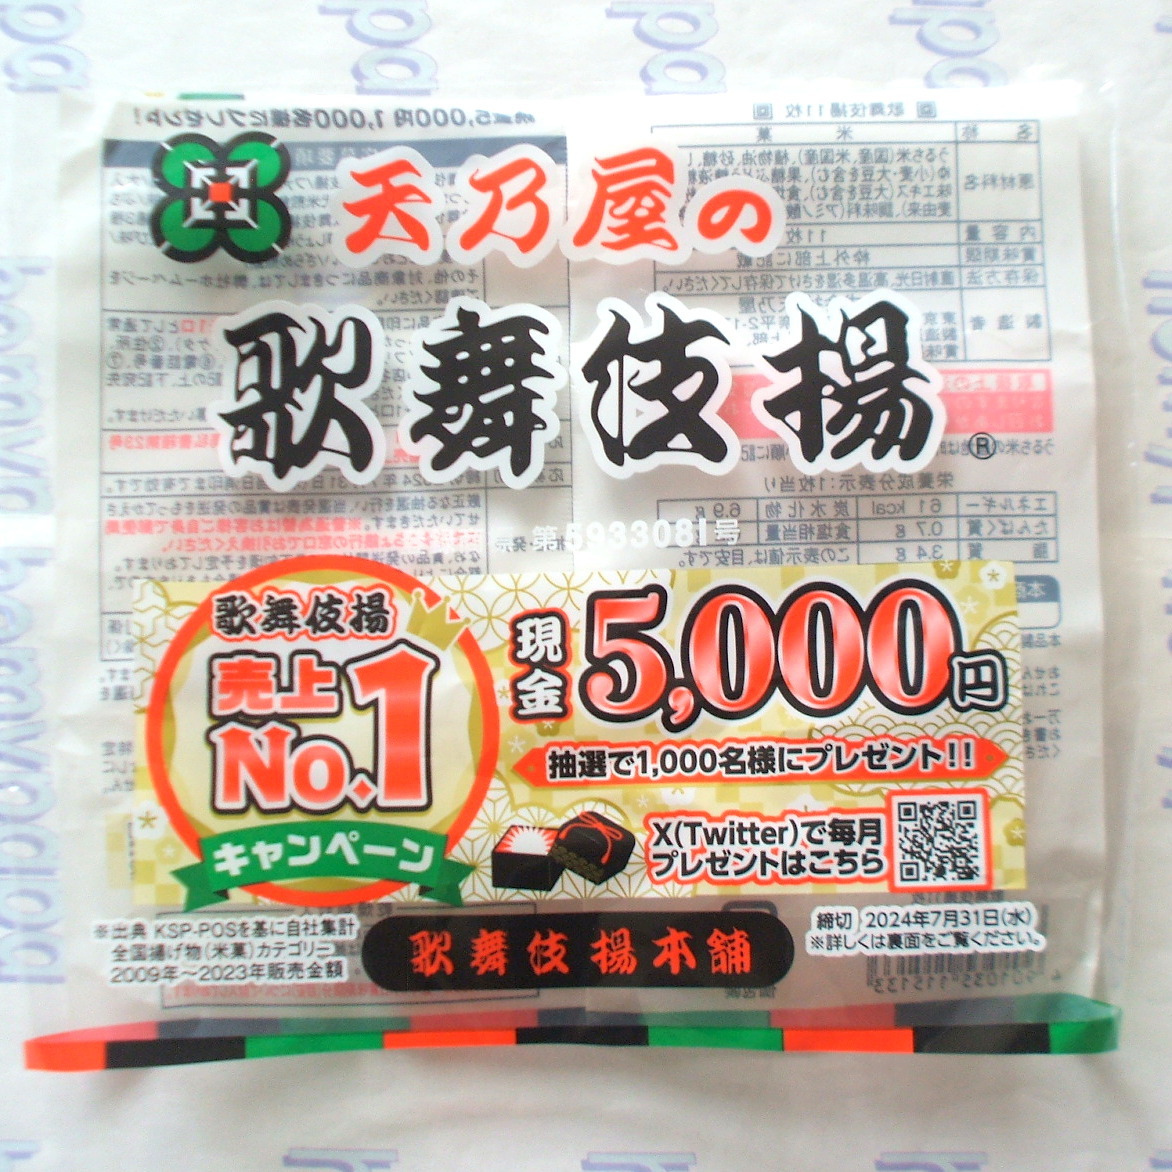 * heaven . shop kabuki .[. on No1 campaign cash 5,000 jpy present ] barcode 8 sheets *